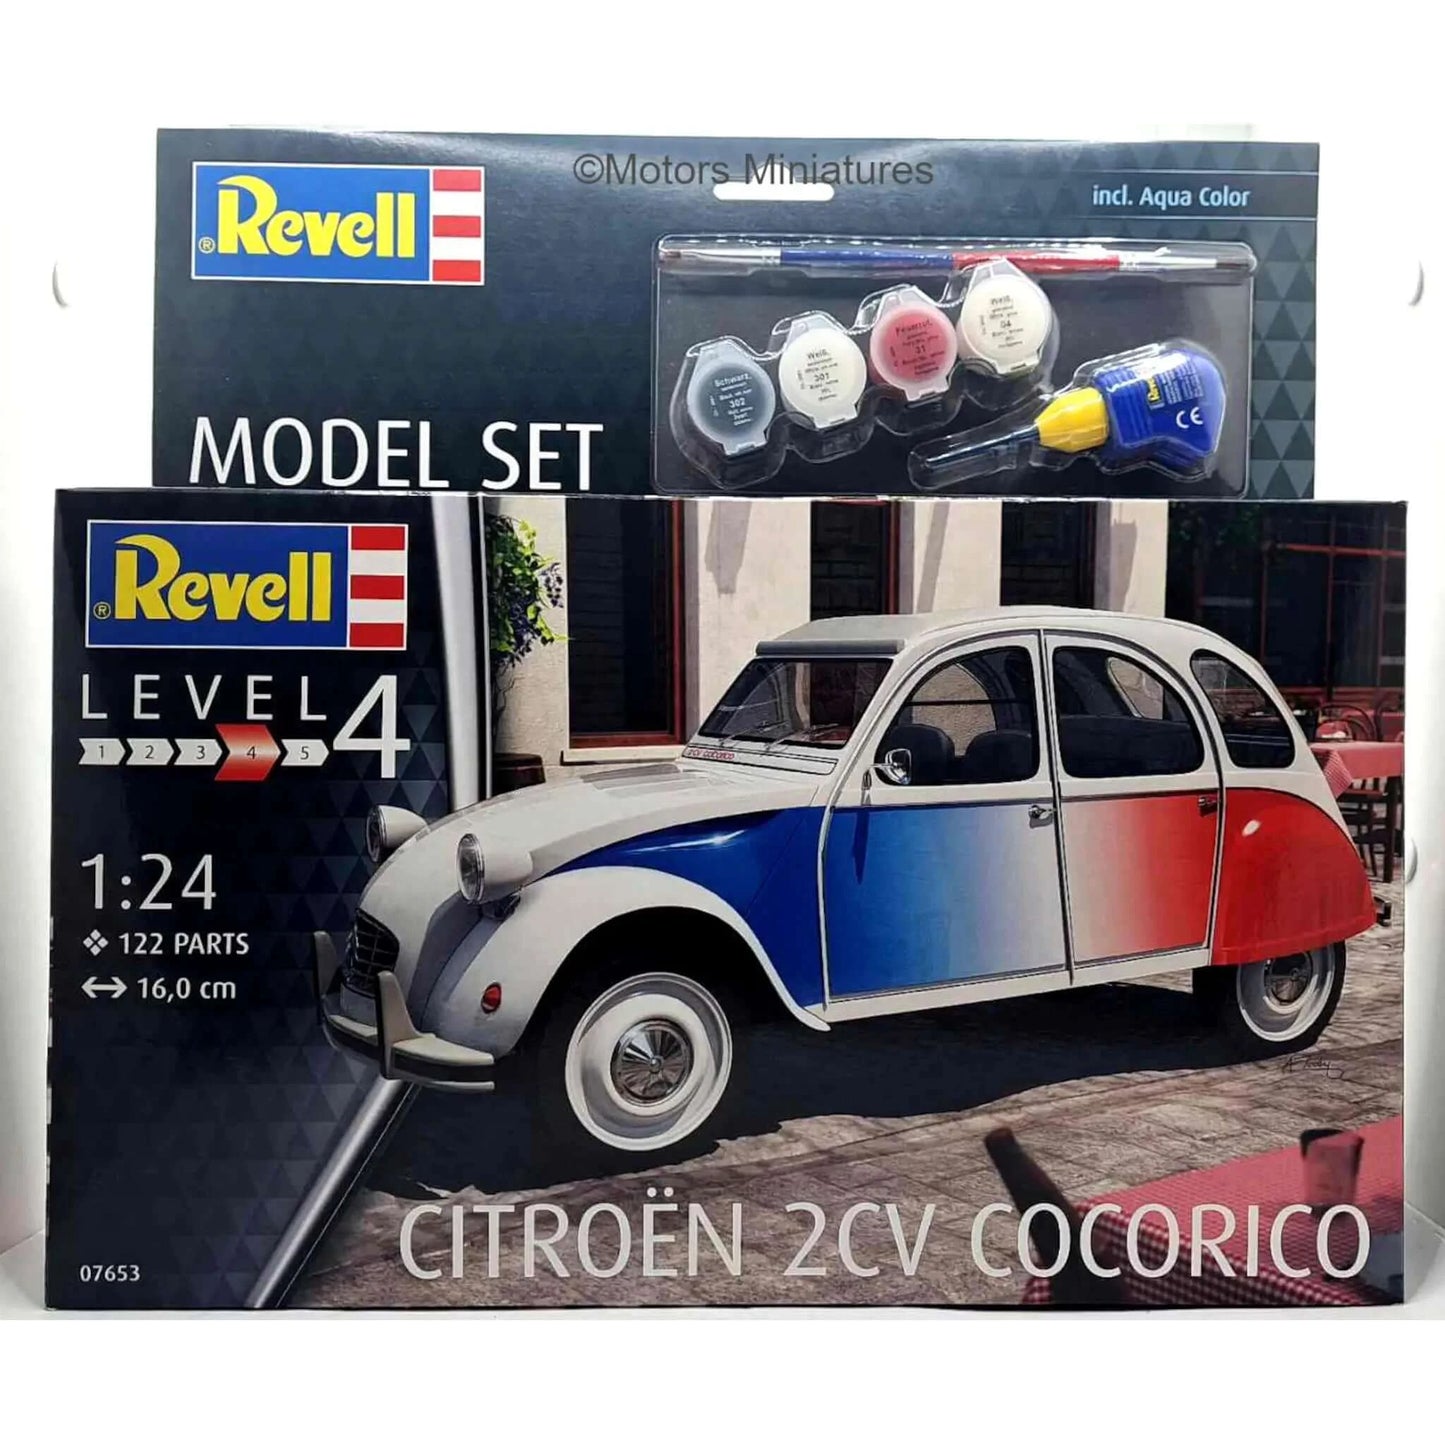 Citroën 2CV Cocorico Modelkit Revell 1/24 | Motors Miniatures